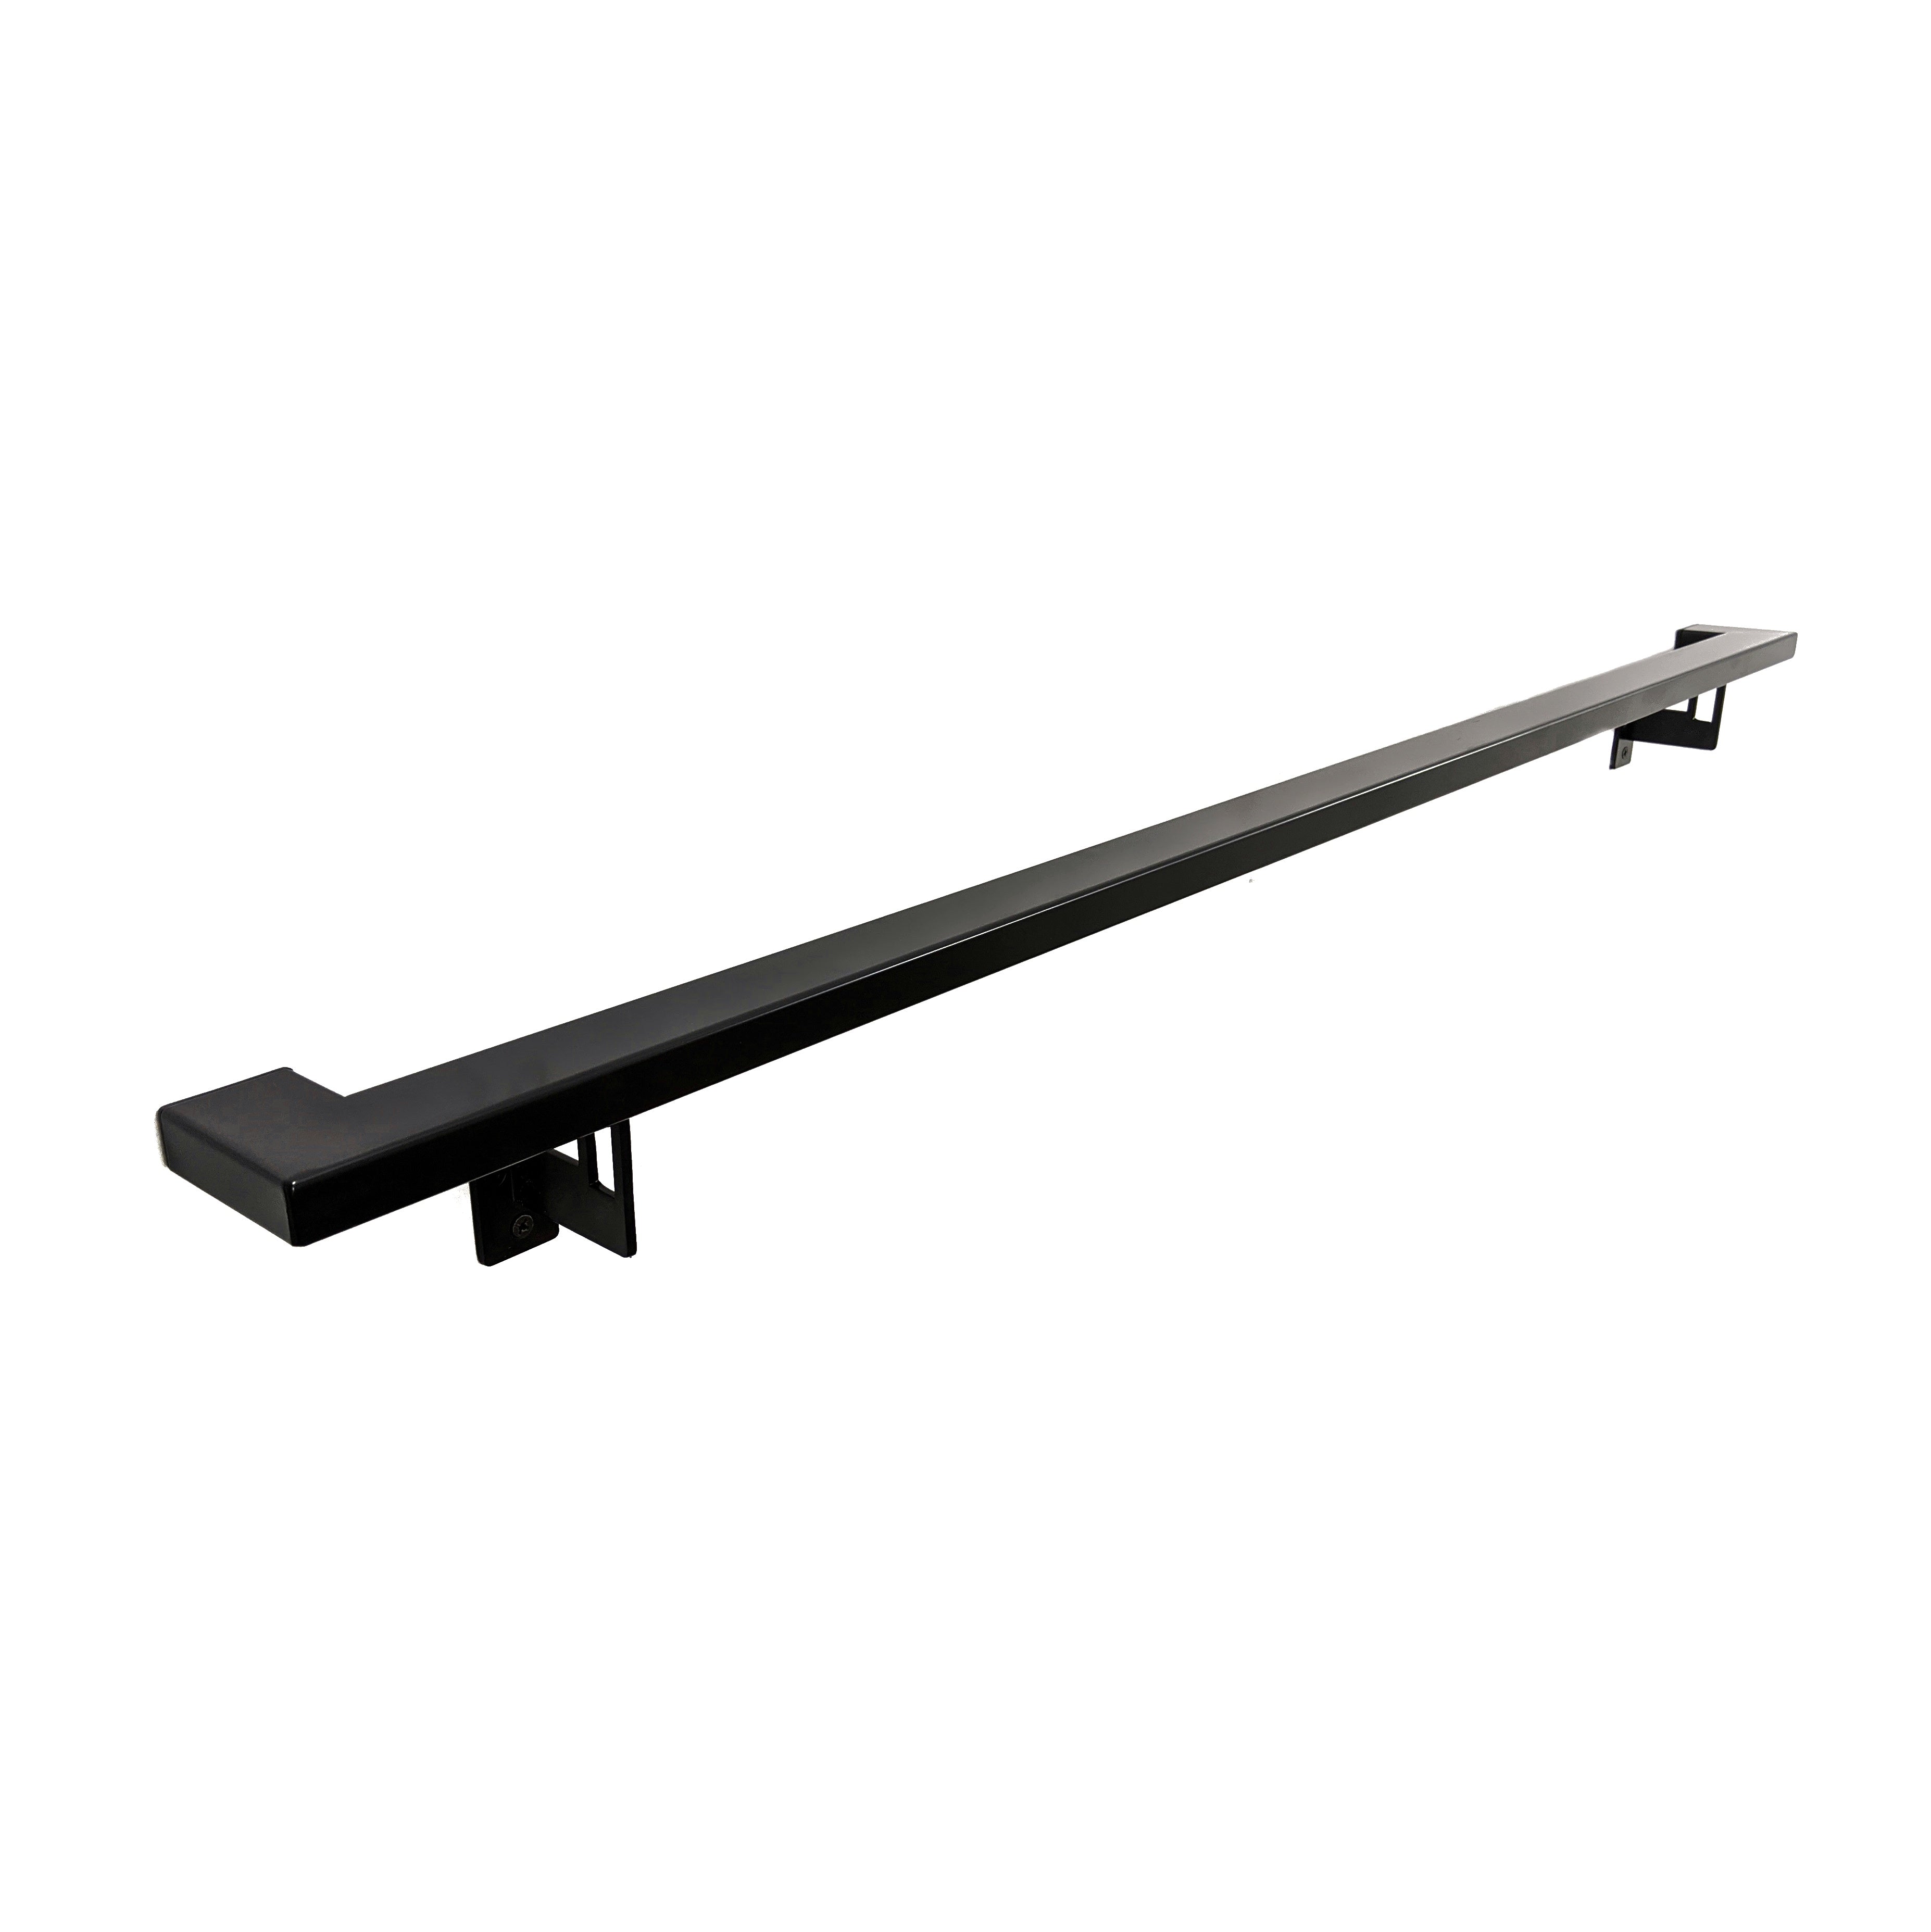 Modern Minimalist High Strength Aluminum Handrail Grab Bar, Brackets Included, Matt Black Powder Coat